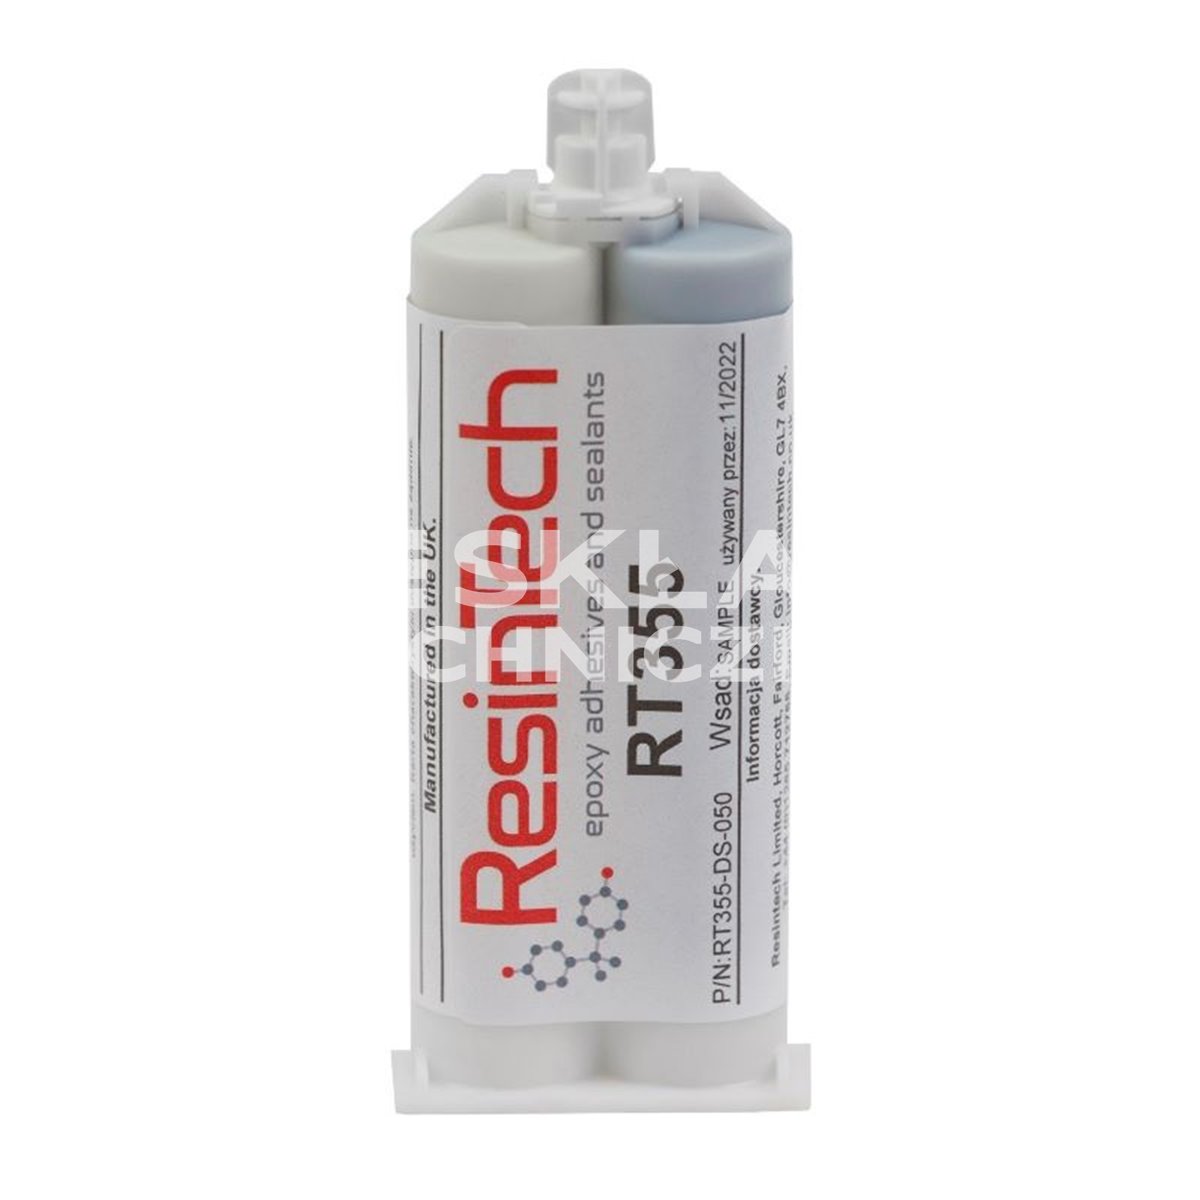 Epoxy resin RT355 Duosyringe 50 ml ResinTech